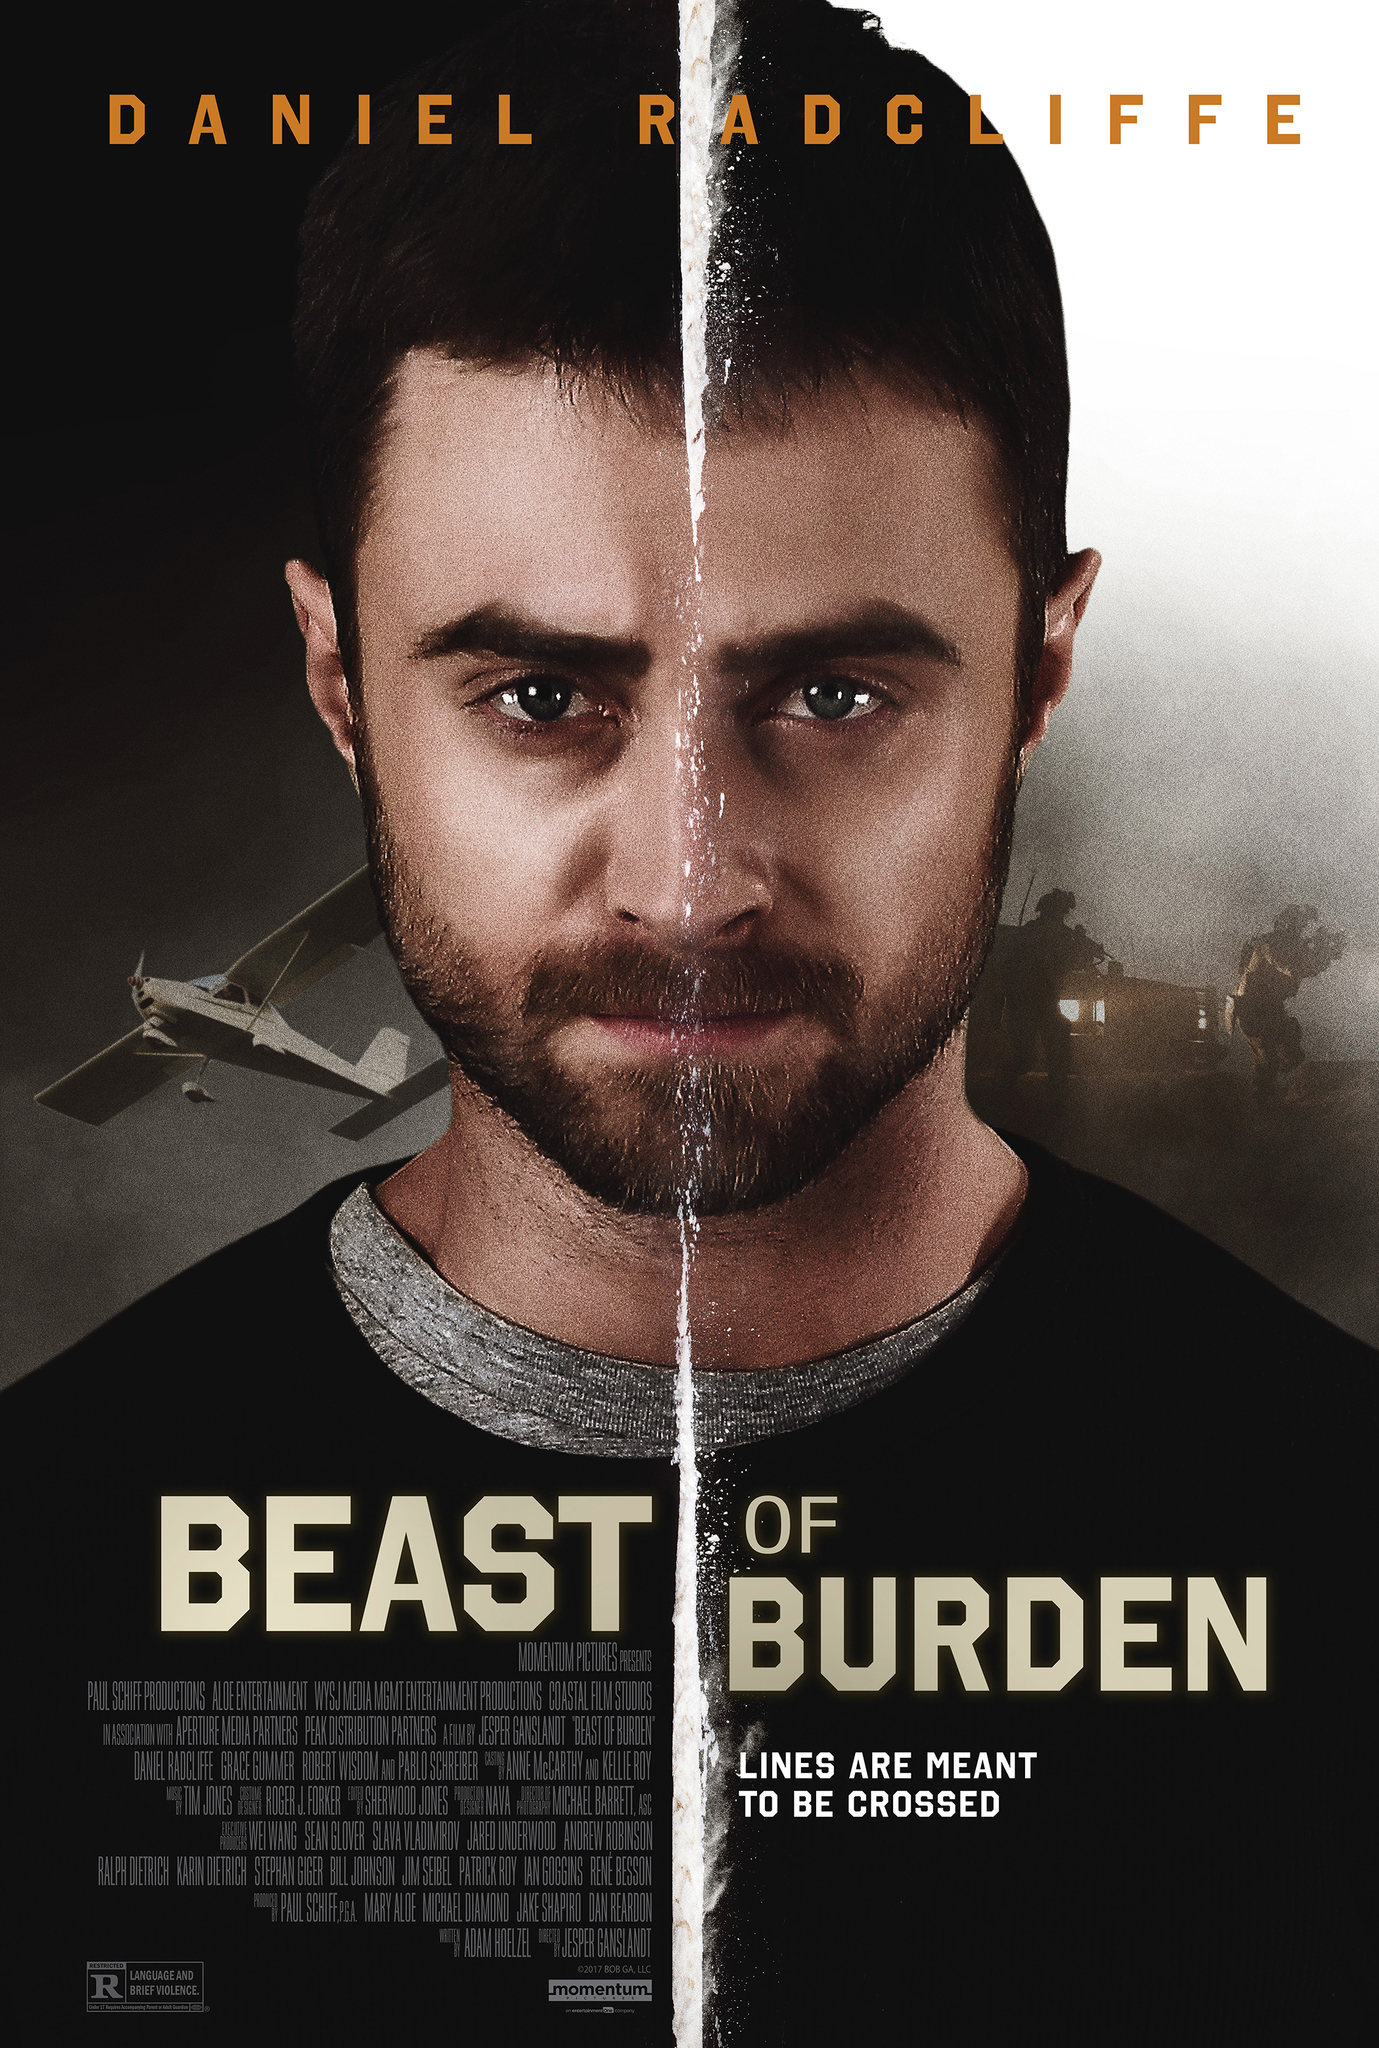 Nonton film Beast of Burden layarkaca21 indoxx1 ganool online streaming terbaru